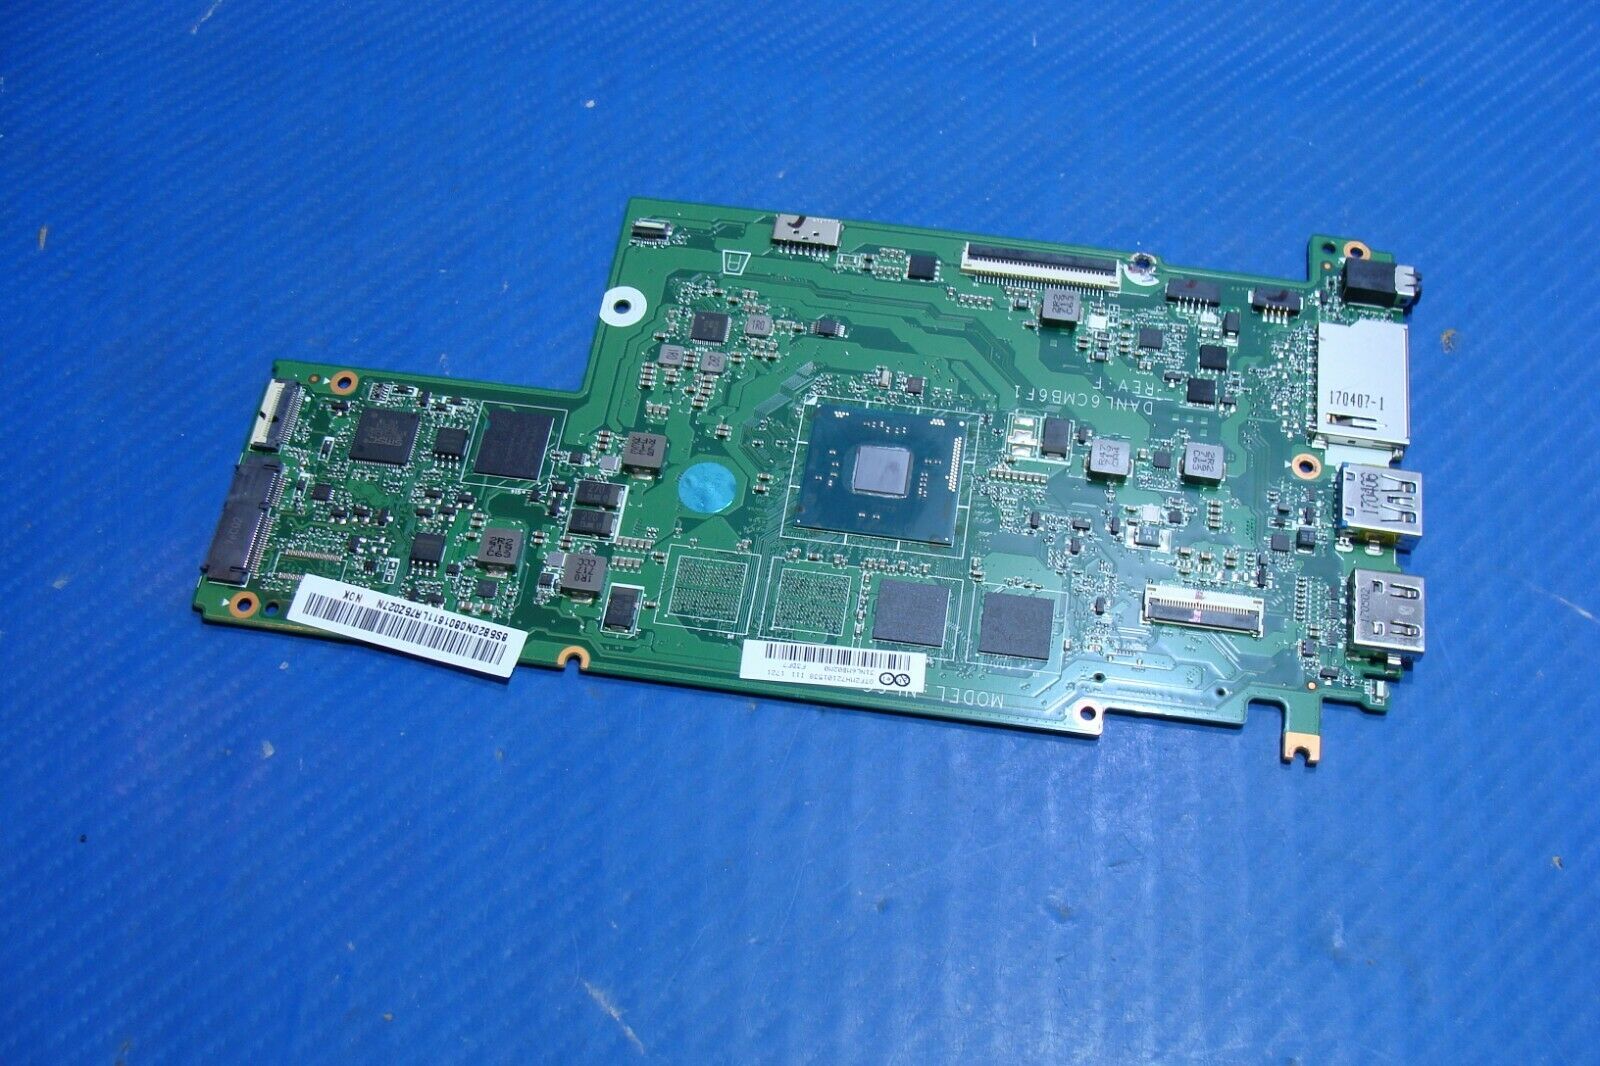 Lenovo Chromebook 11.6 N23 Intel N3060 1.6GHz Motherboard DANL6CMB6F1 AS IS GLP* Lenovo